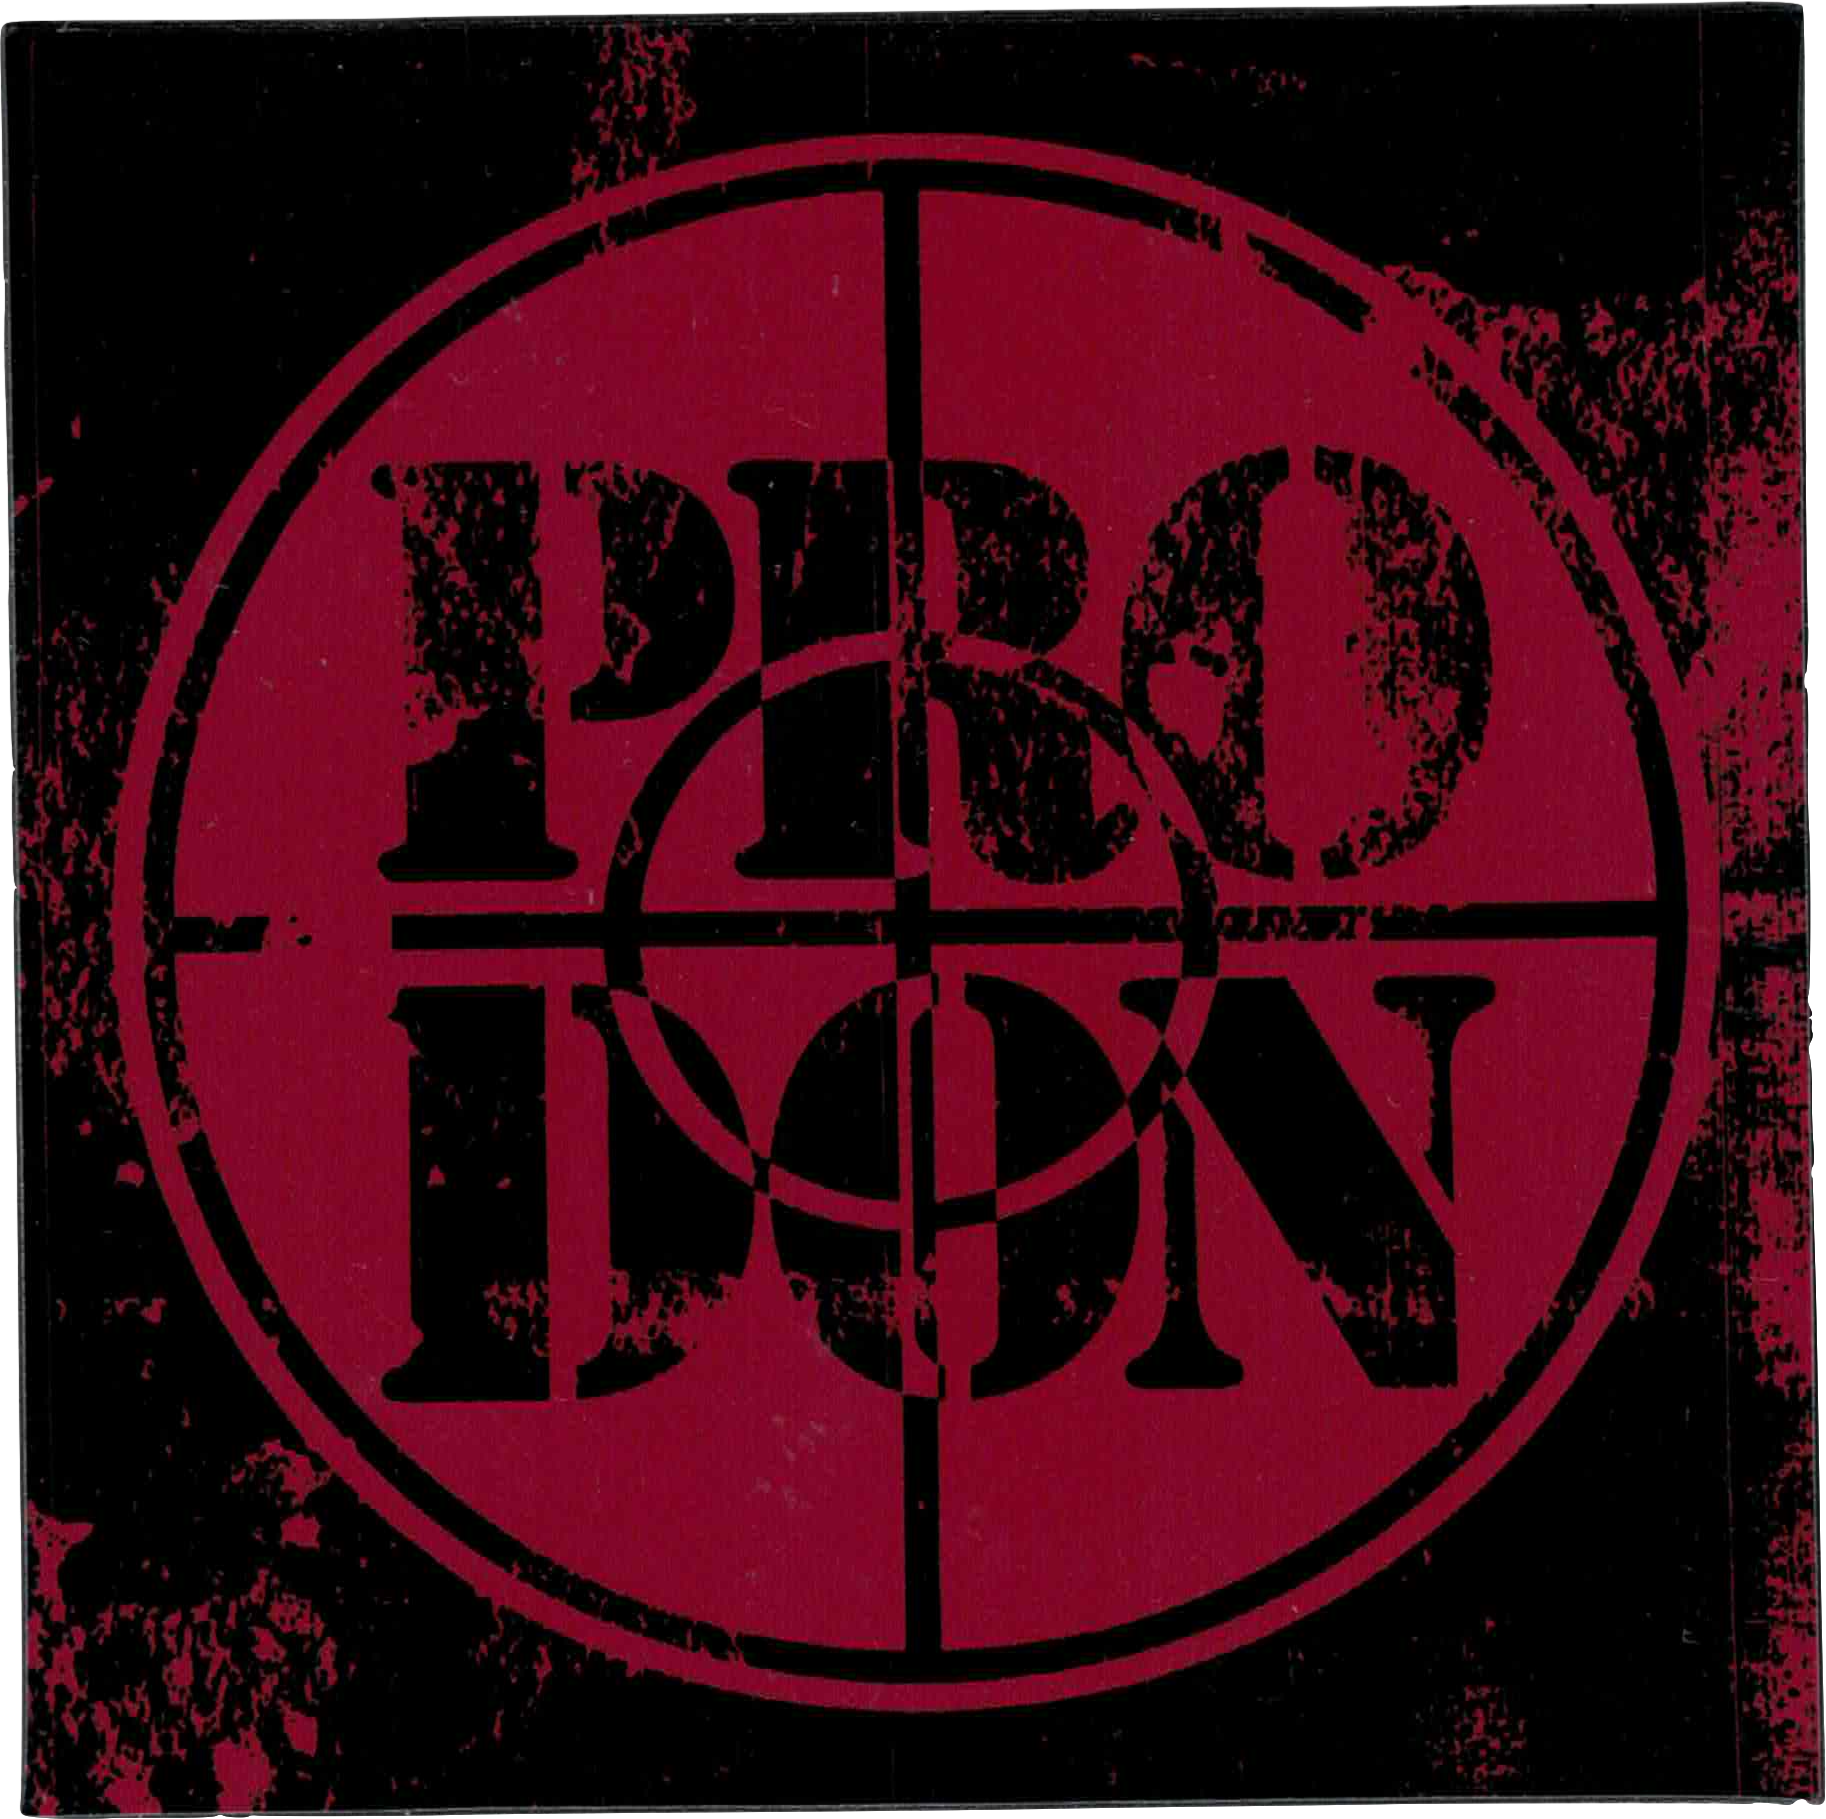 Promoe & Don Martin "Public Enemy" [Magnet]